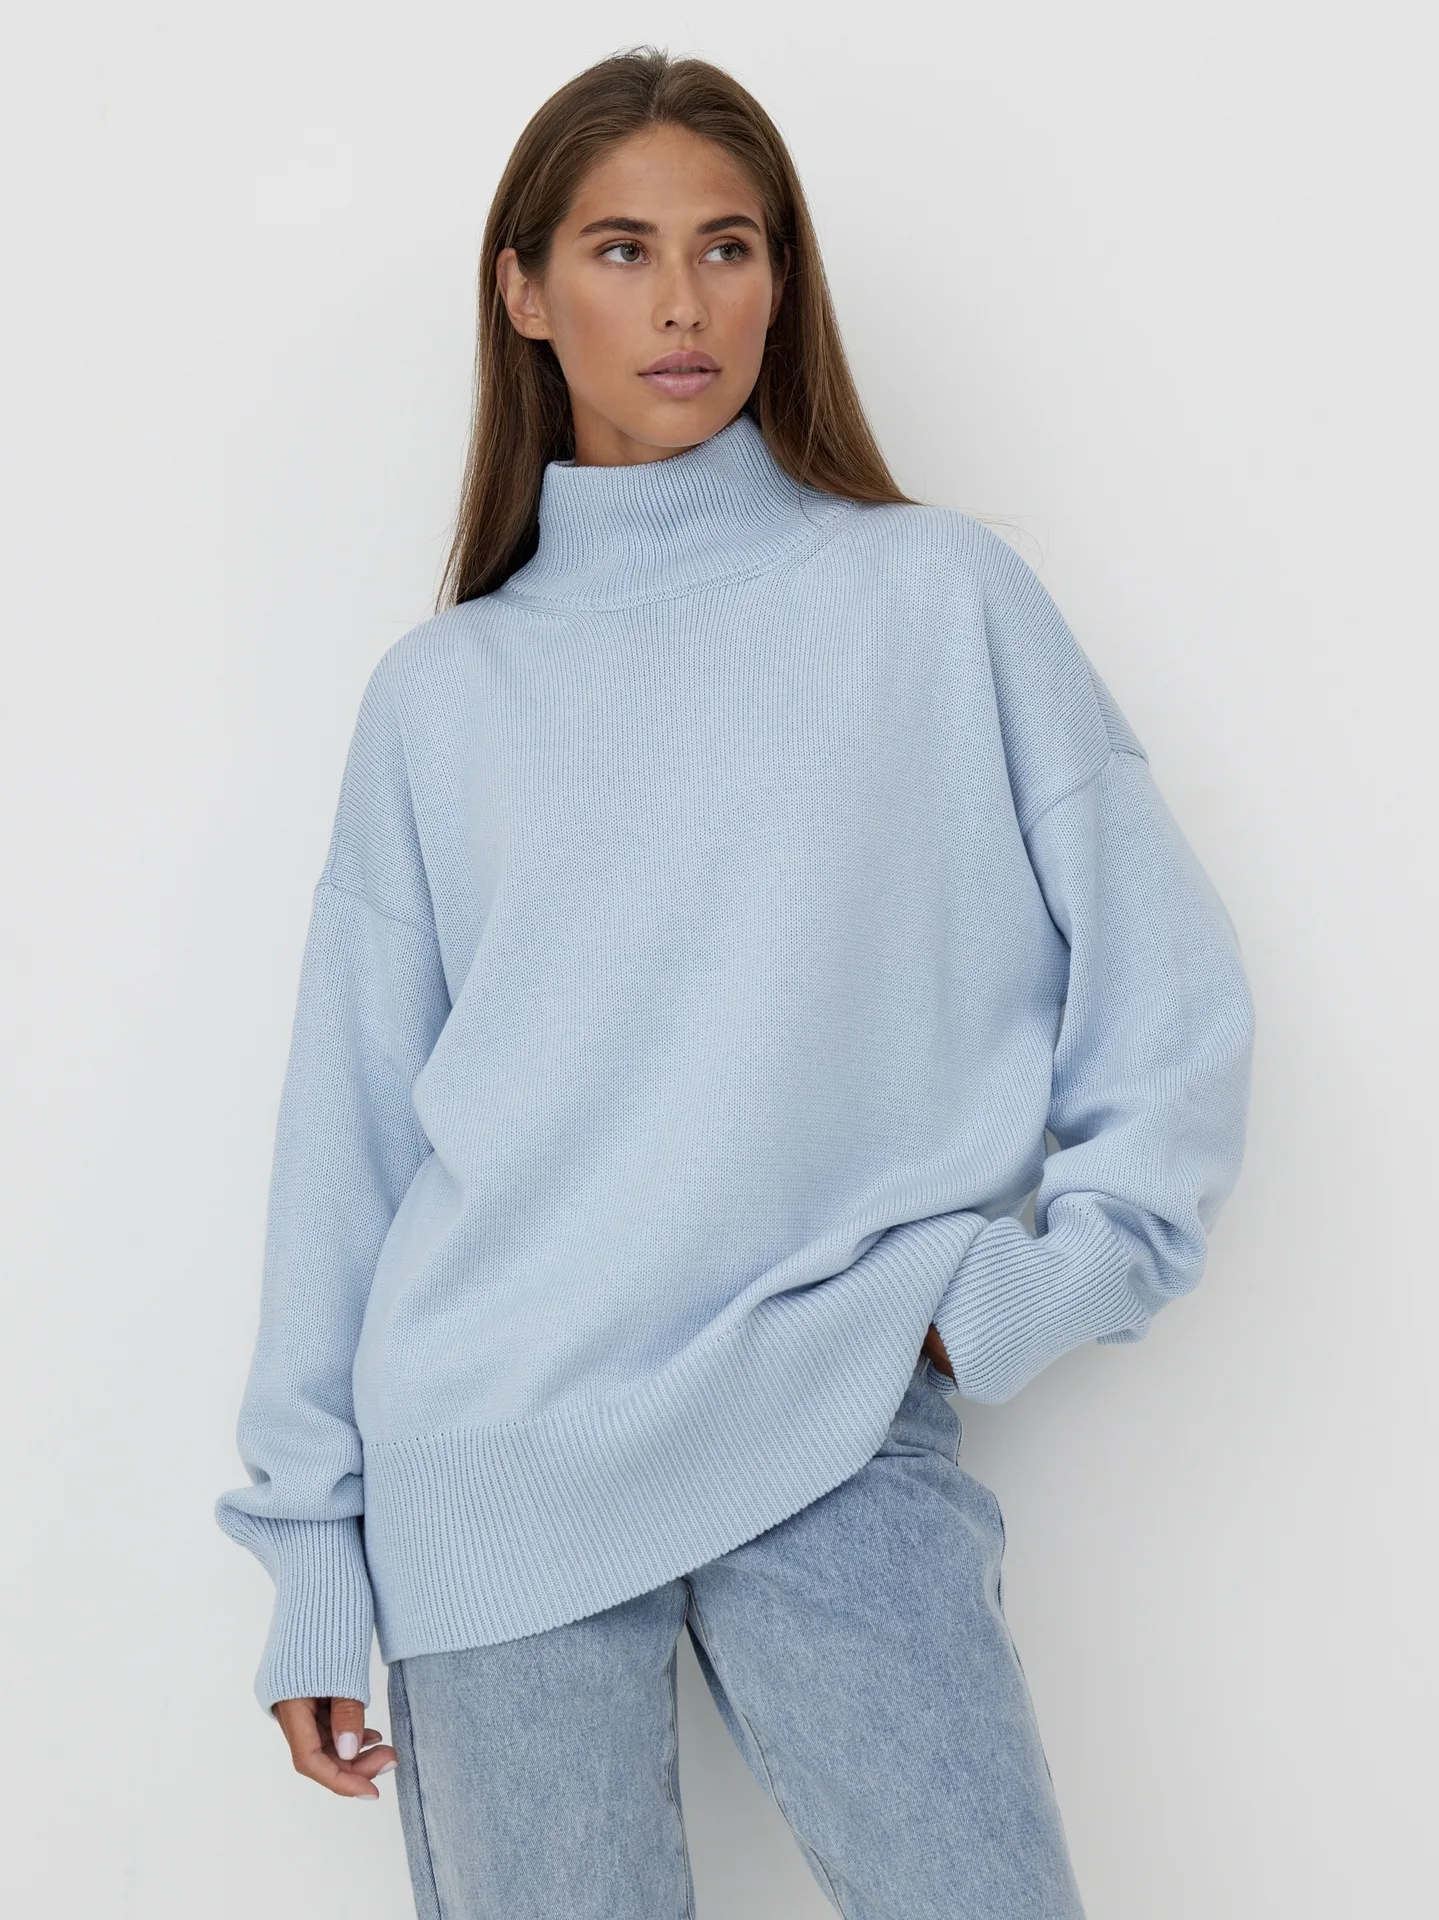 

RDMQ 2023 Women Semi Turtleneck Knitwear Solid Sweater Autumn Winter Loose Fit Raglan Sleeves Pullover Casual Elegant Outerwear